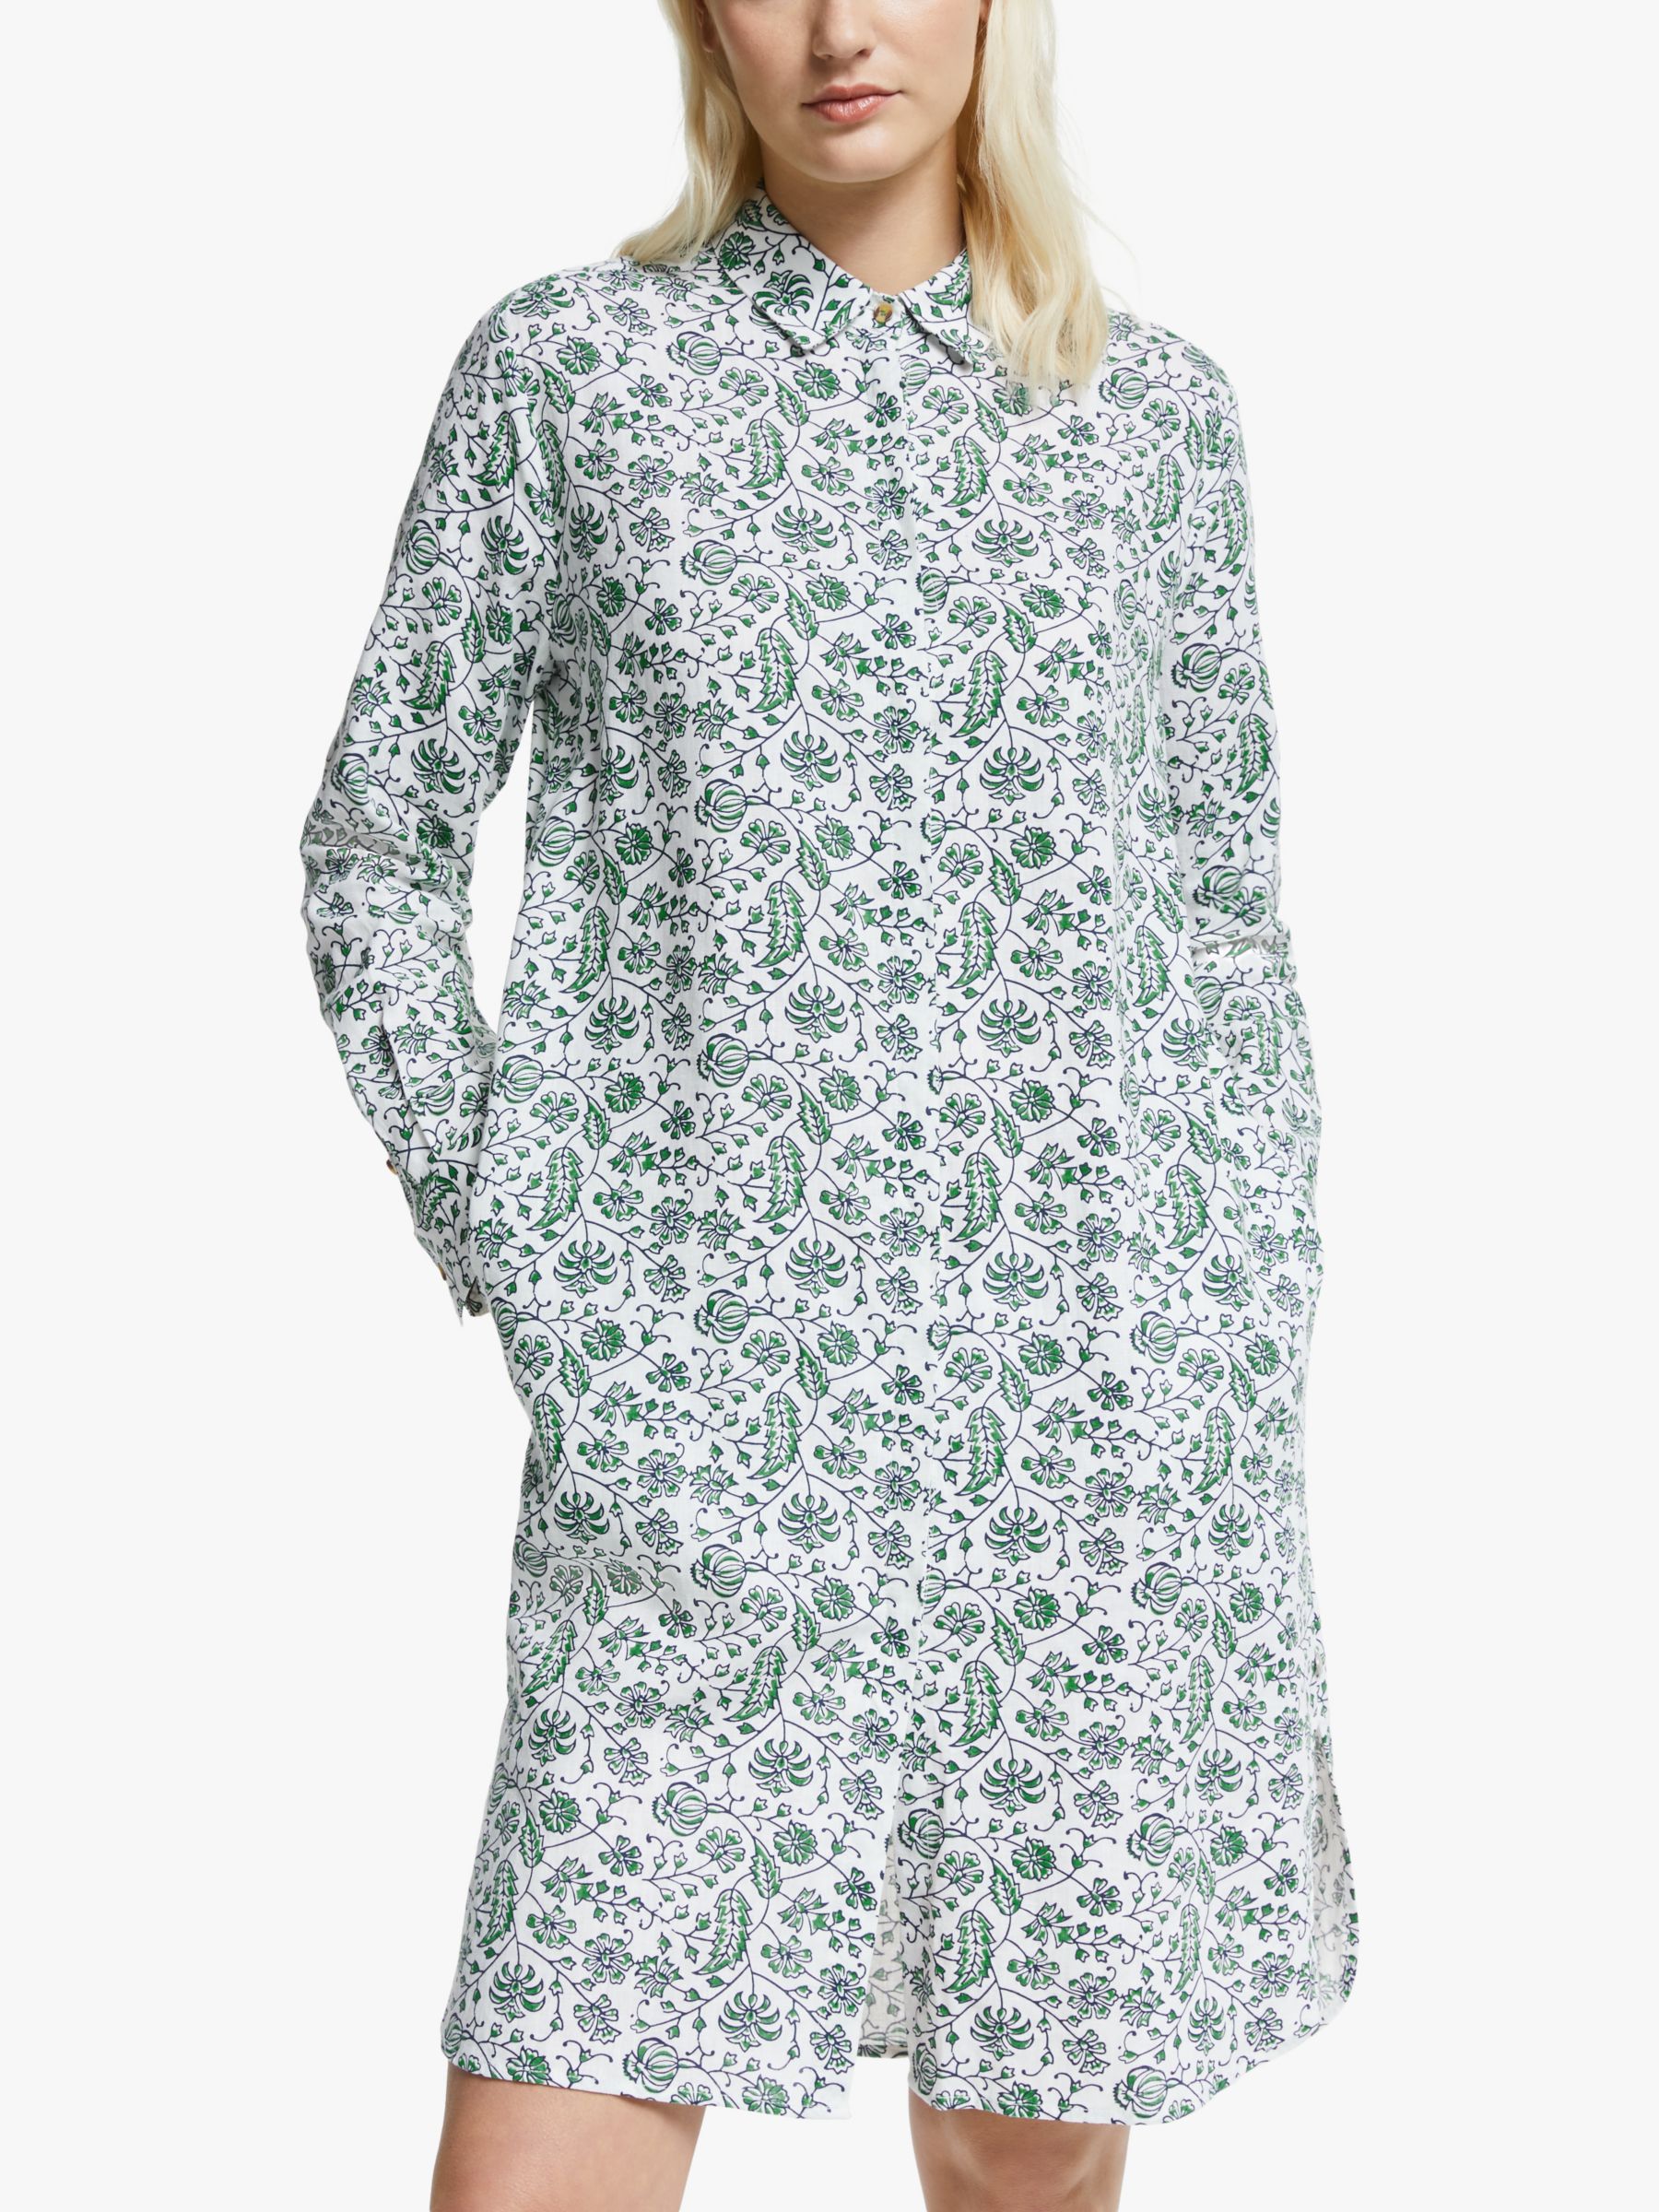 Yerse Long Sleeve Floral Shirt Dress, White/Green